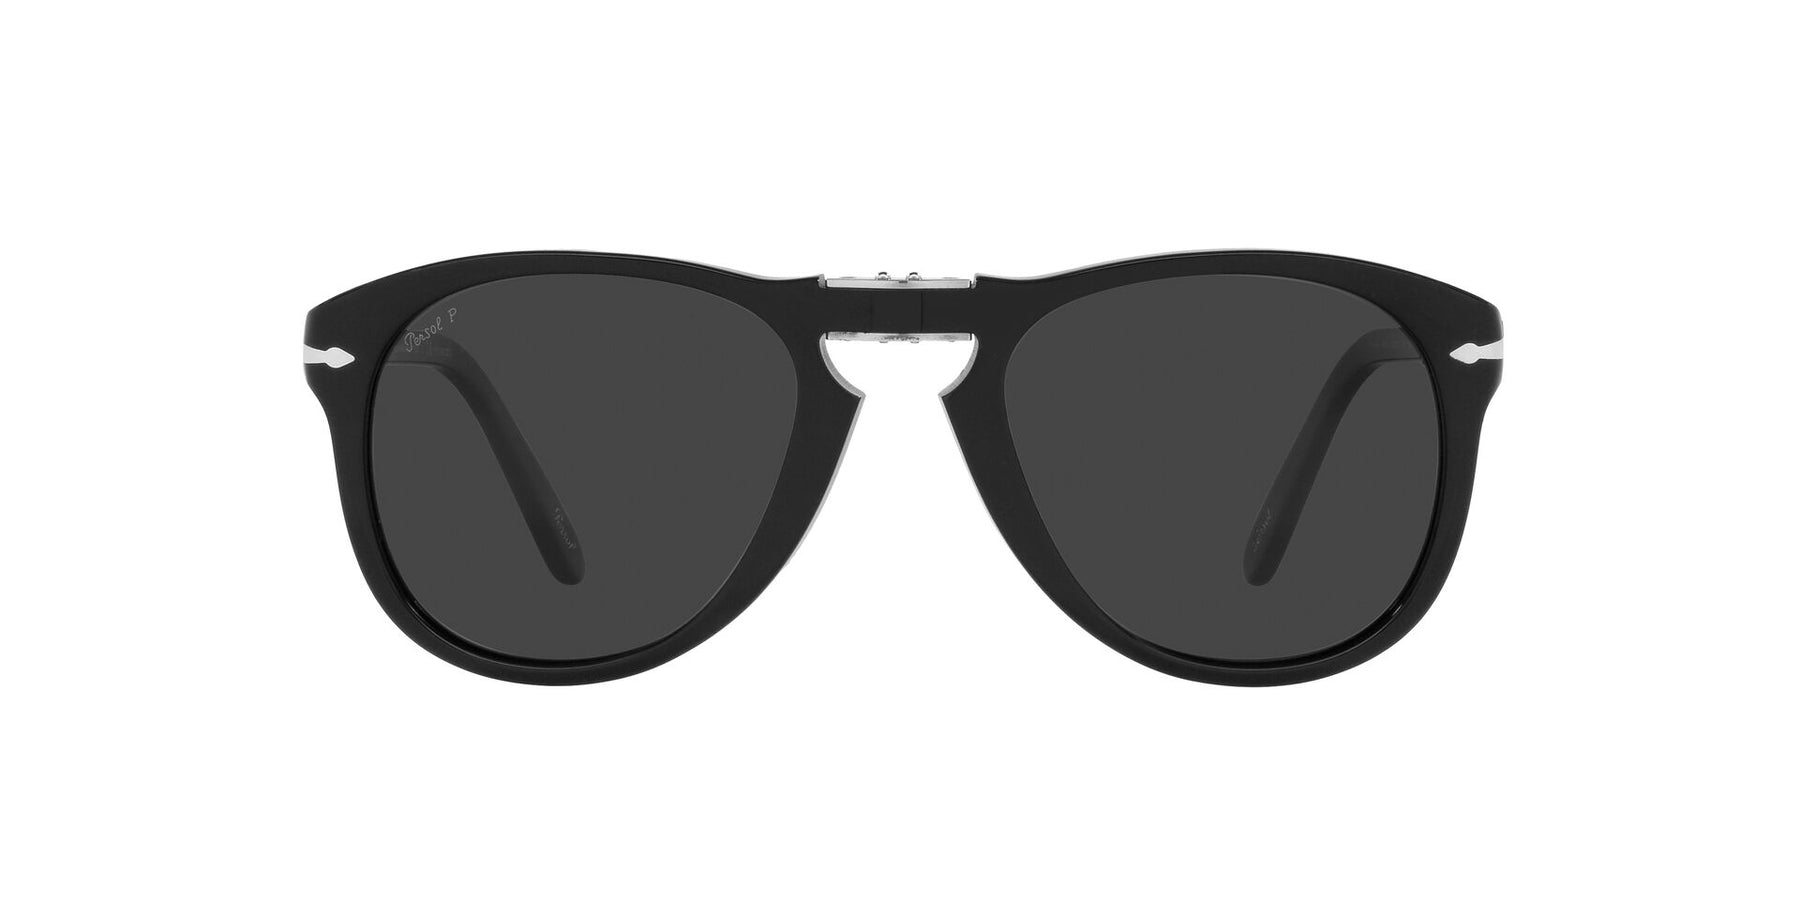 Persol 714 Pilot Sunglasses